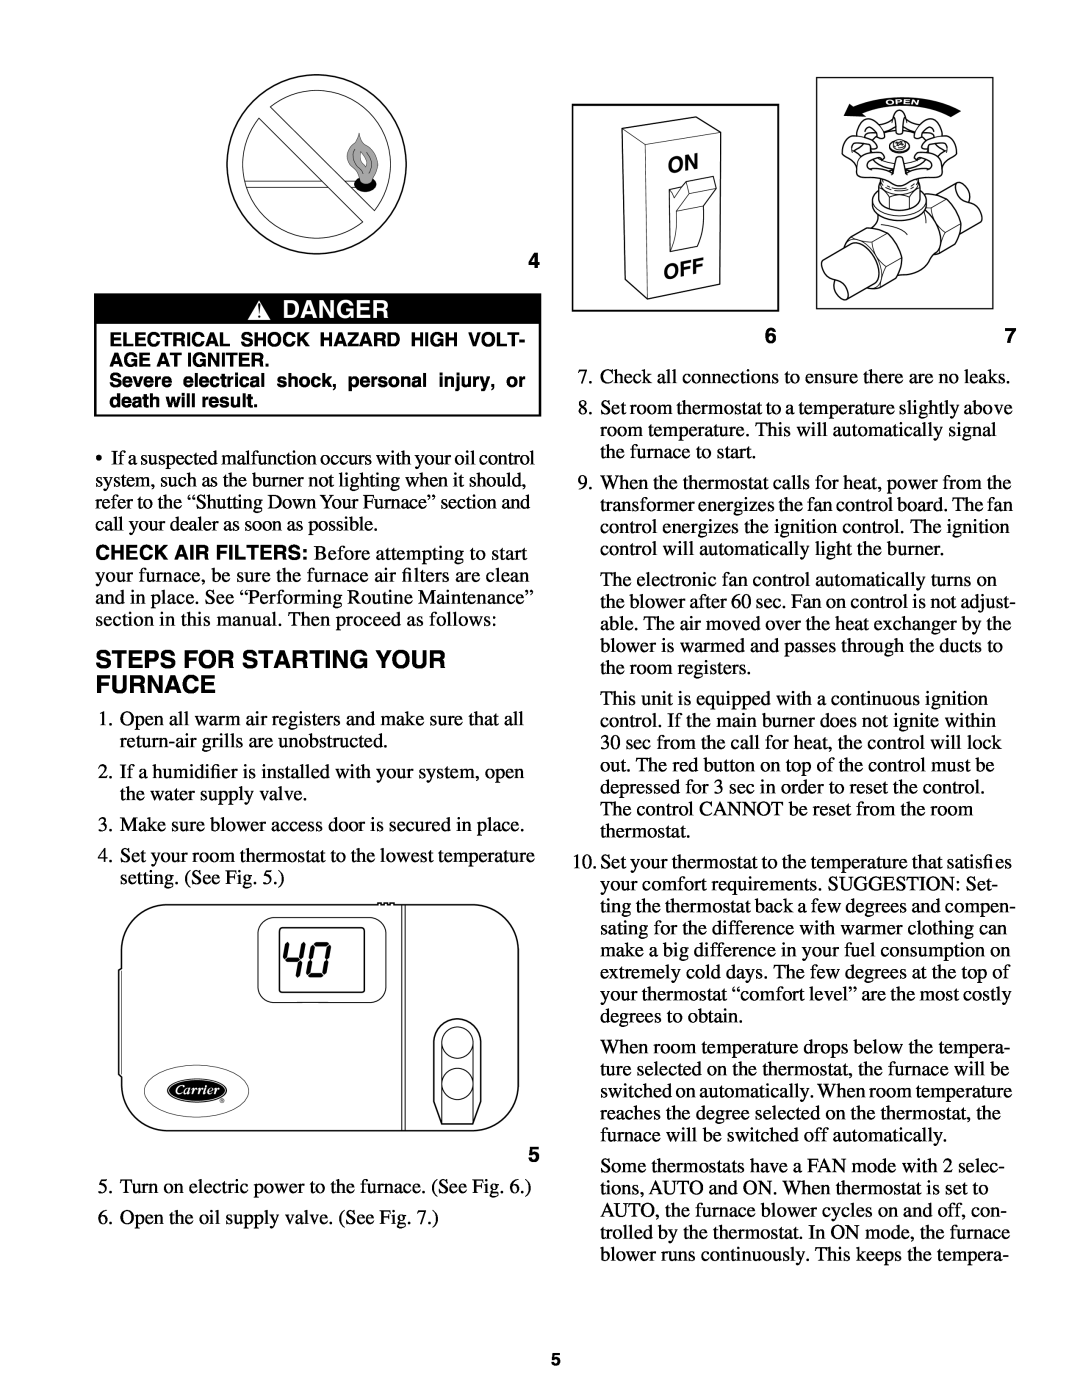 Carrier 58CLA manual Steps For Starting Your Furnace, Danger 